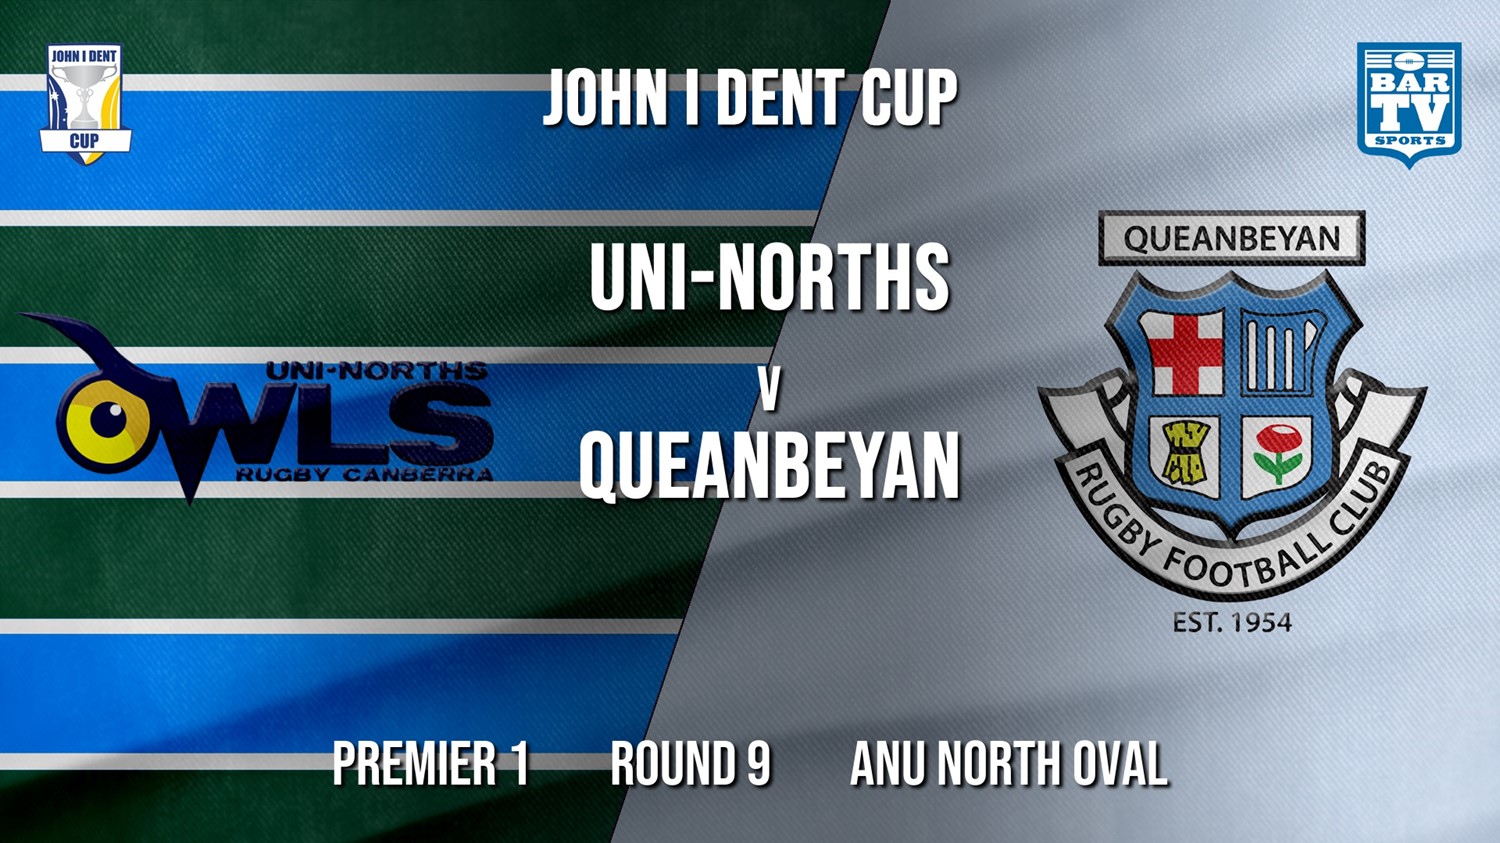 John I Dent Round 9 - Premier 1 - UNI-Norths v Queanbeyan Whites Minigame Slate Image